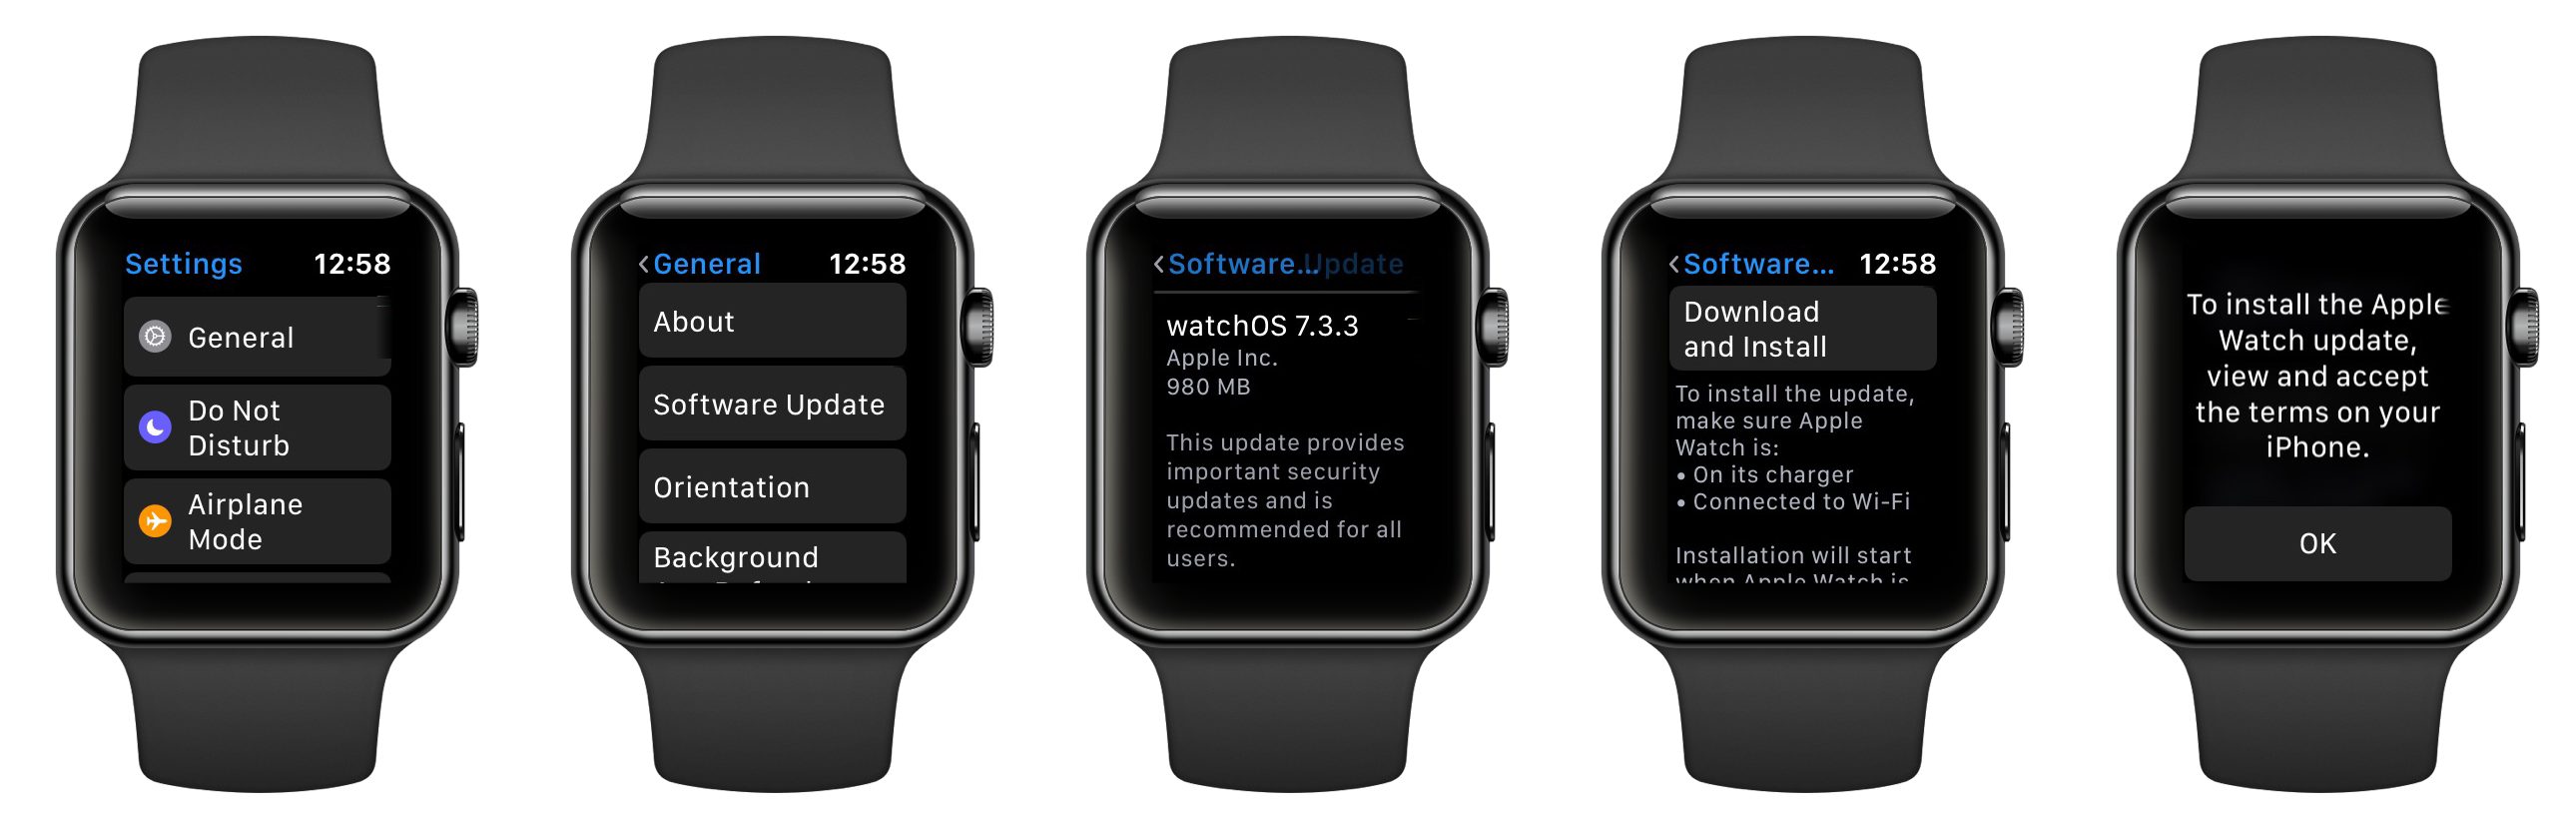 Apple Watch Series 3 Update Workarounds - TidBITS